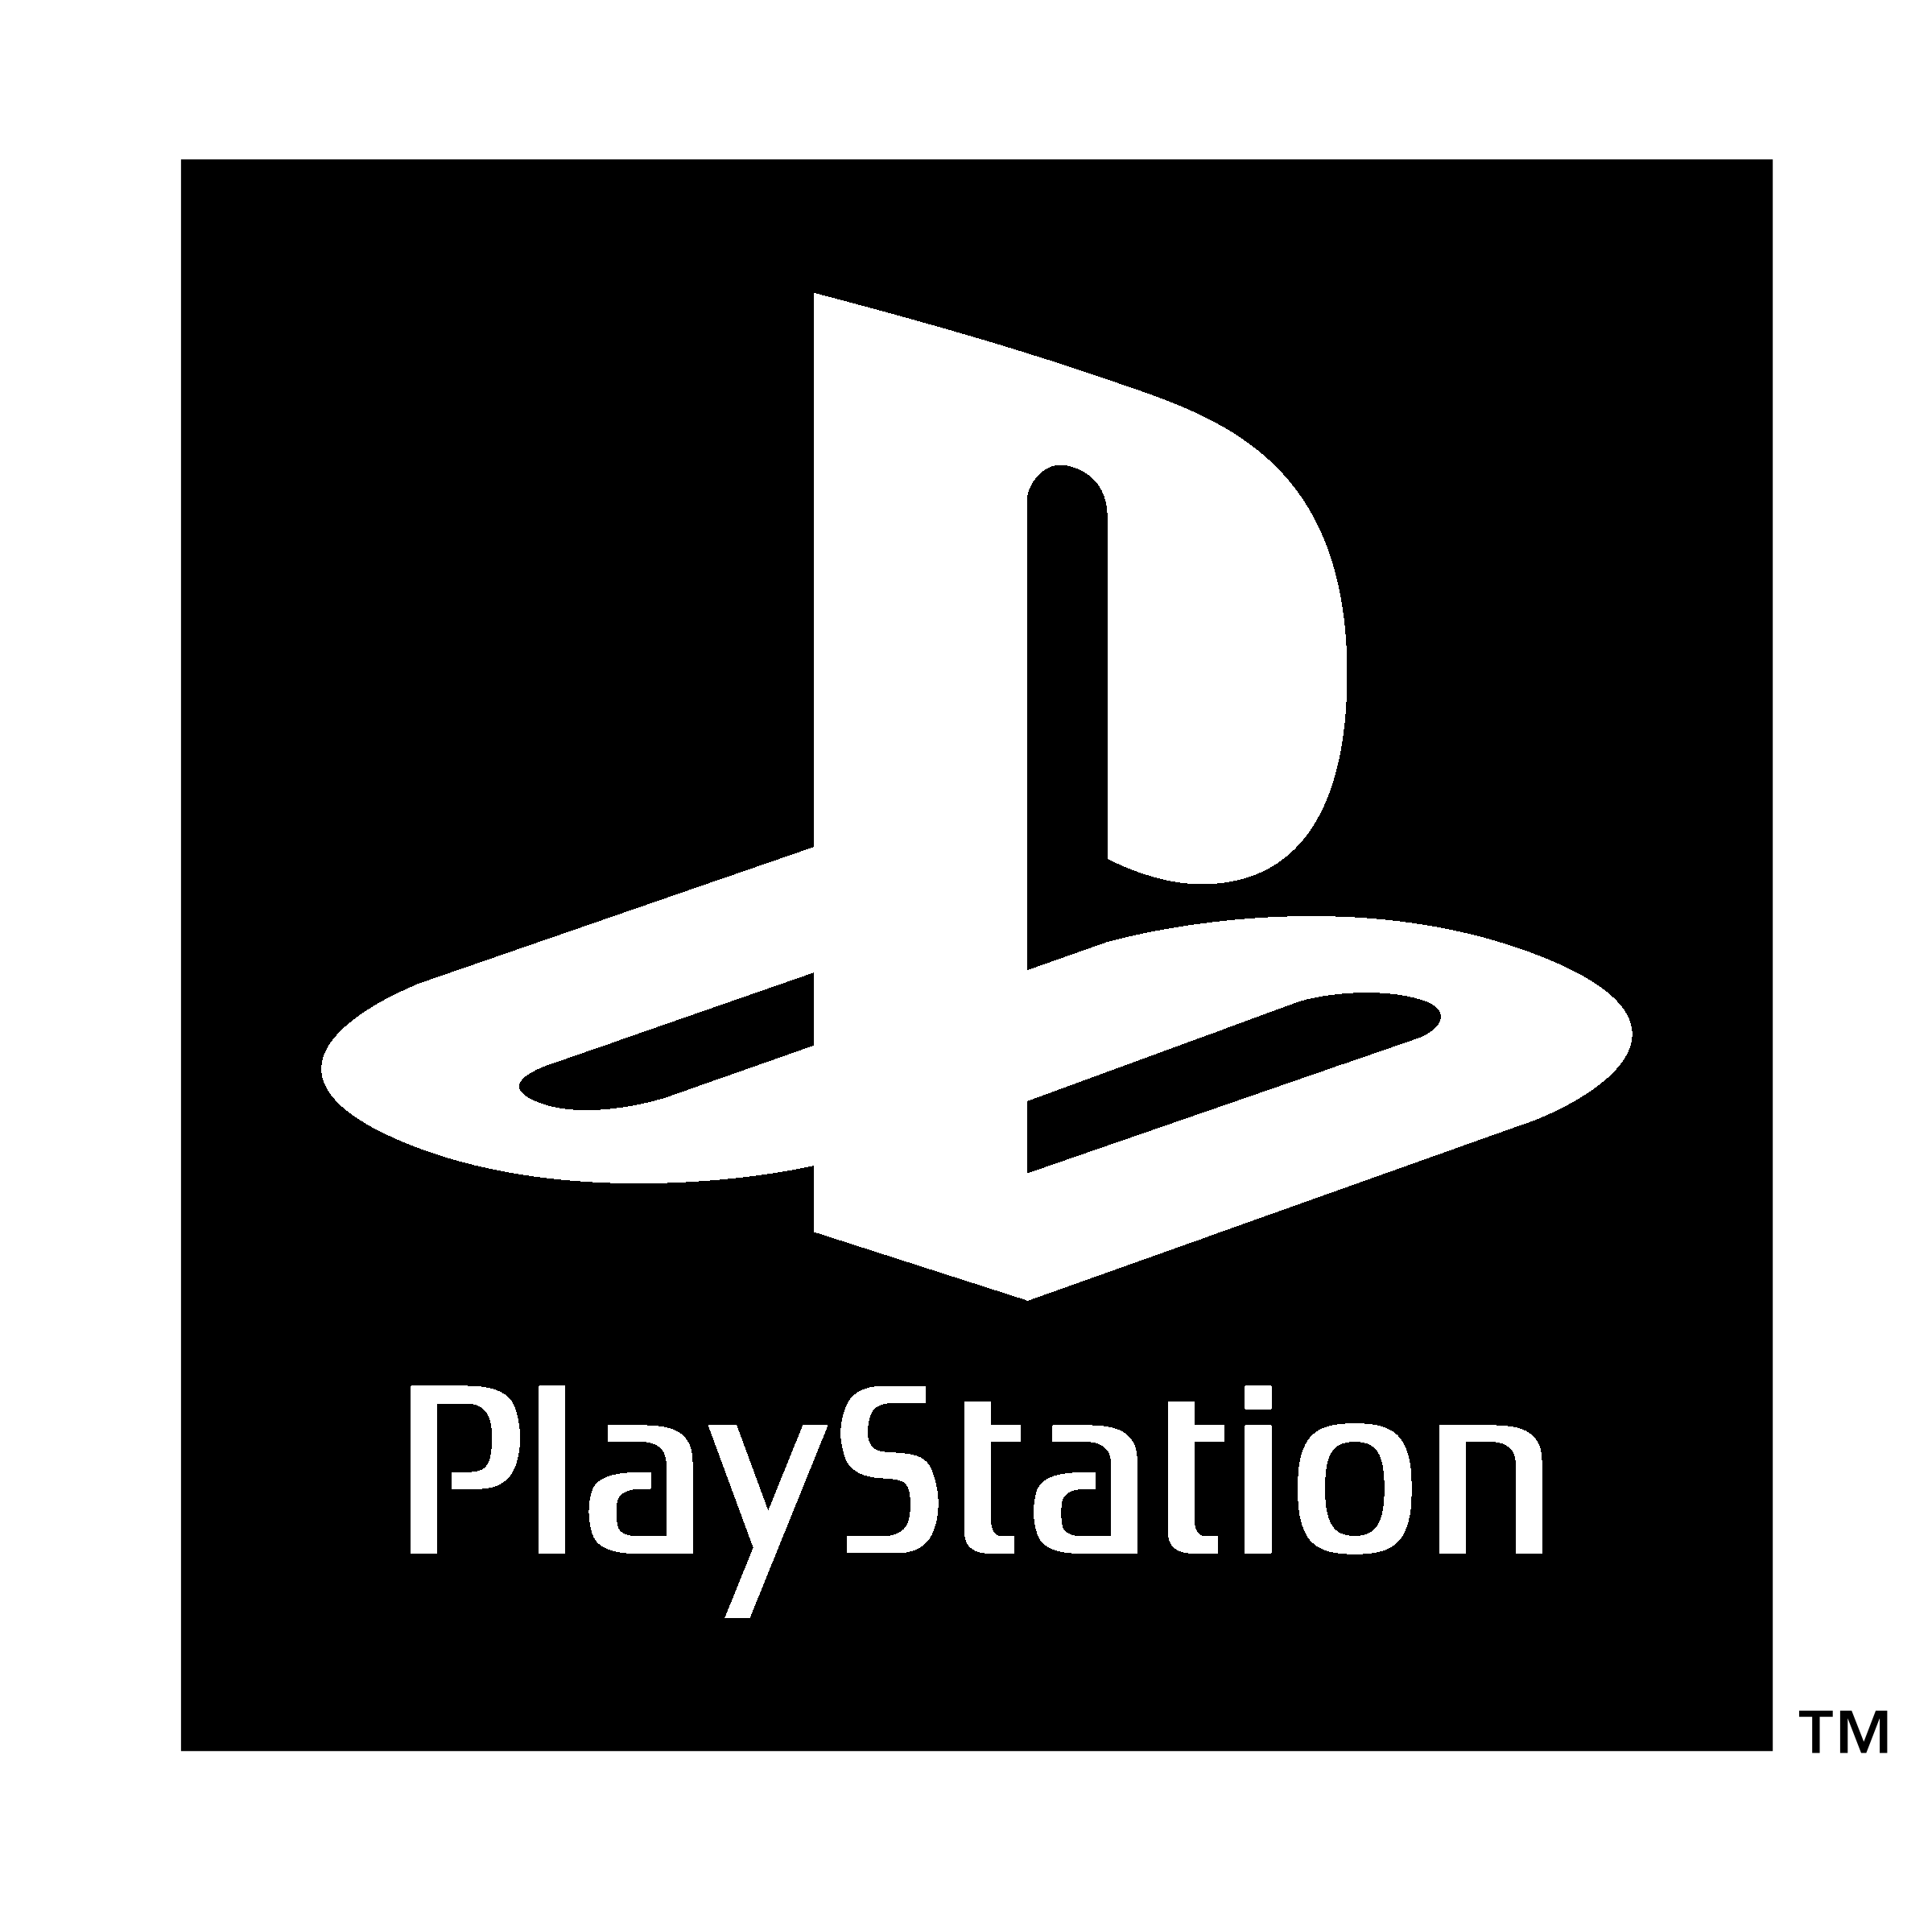 PlayStation Logo No Background